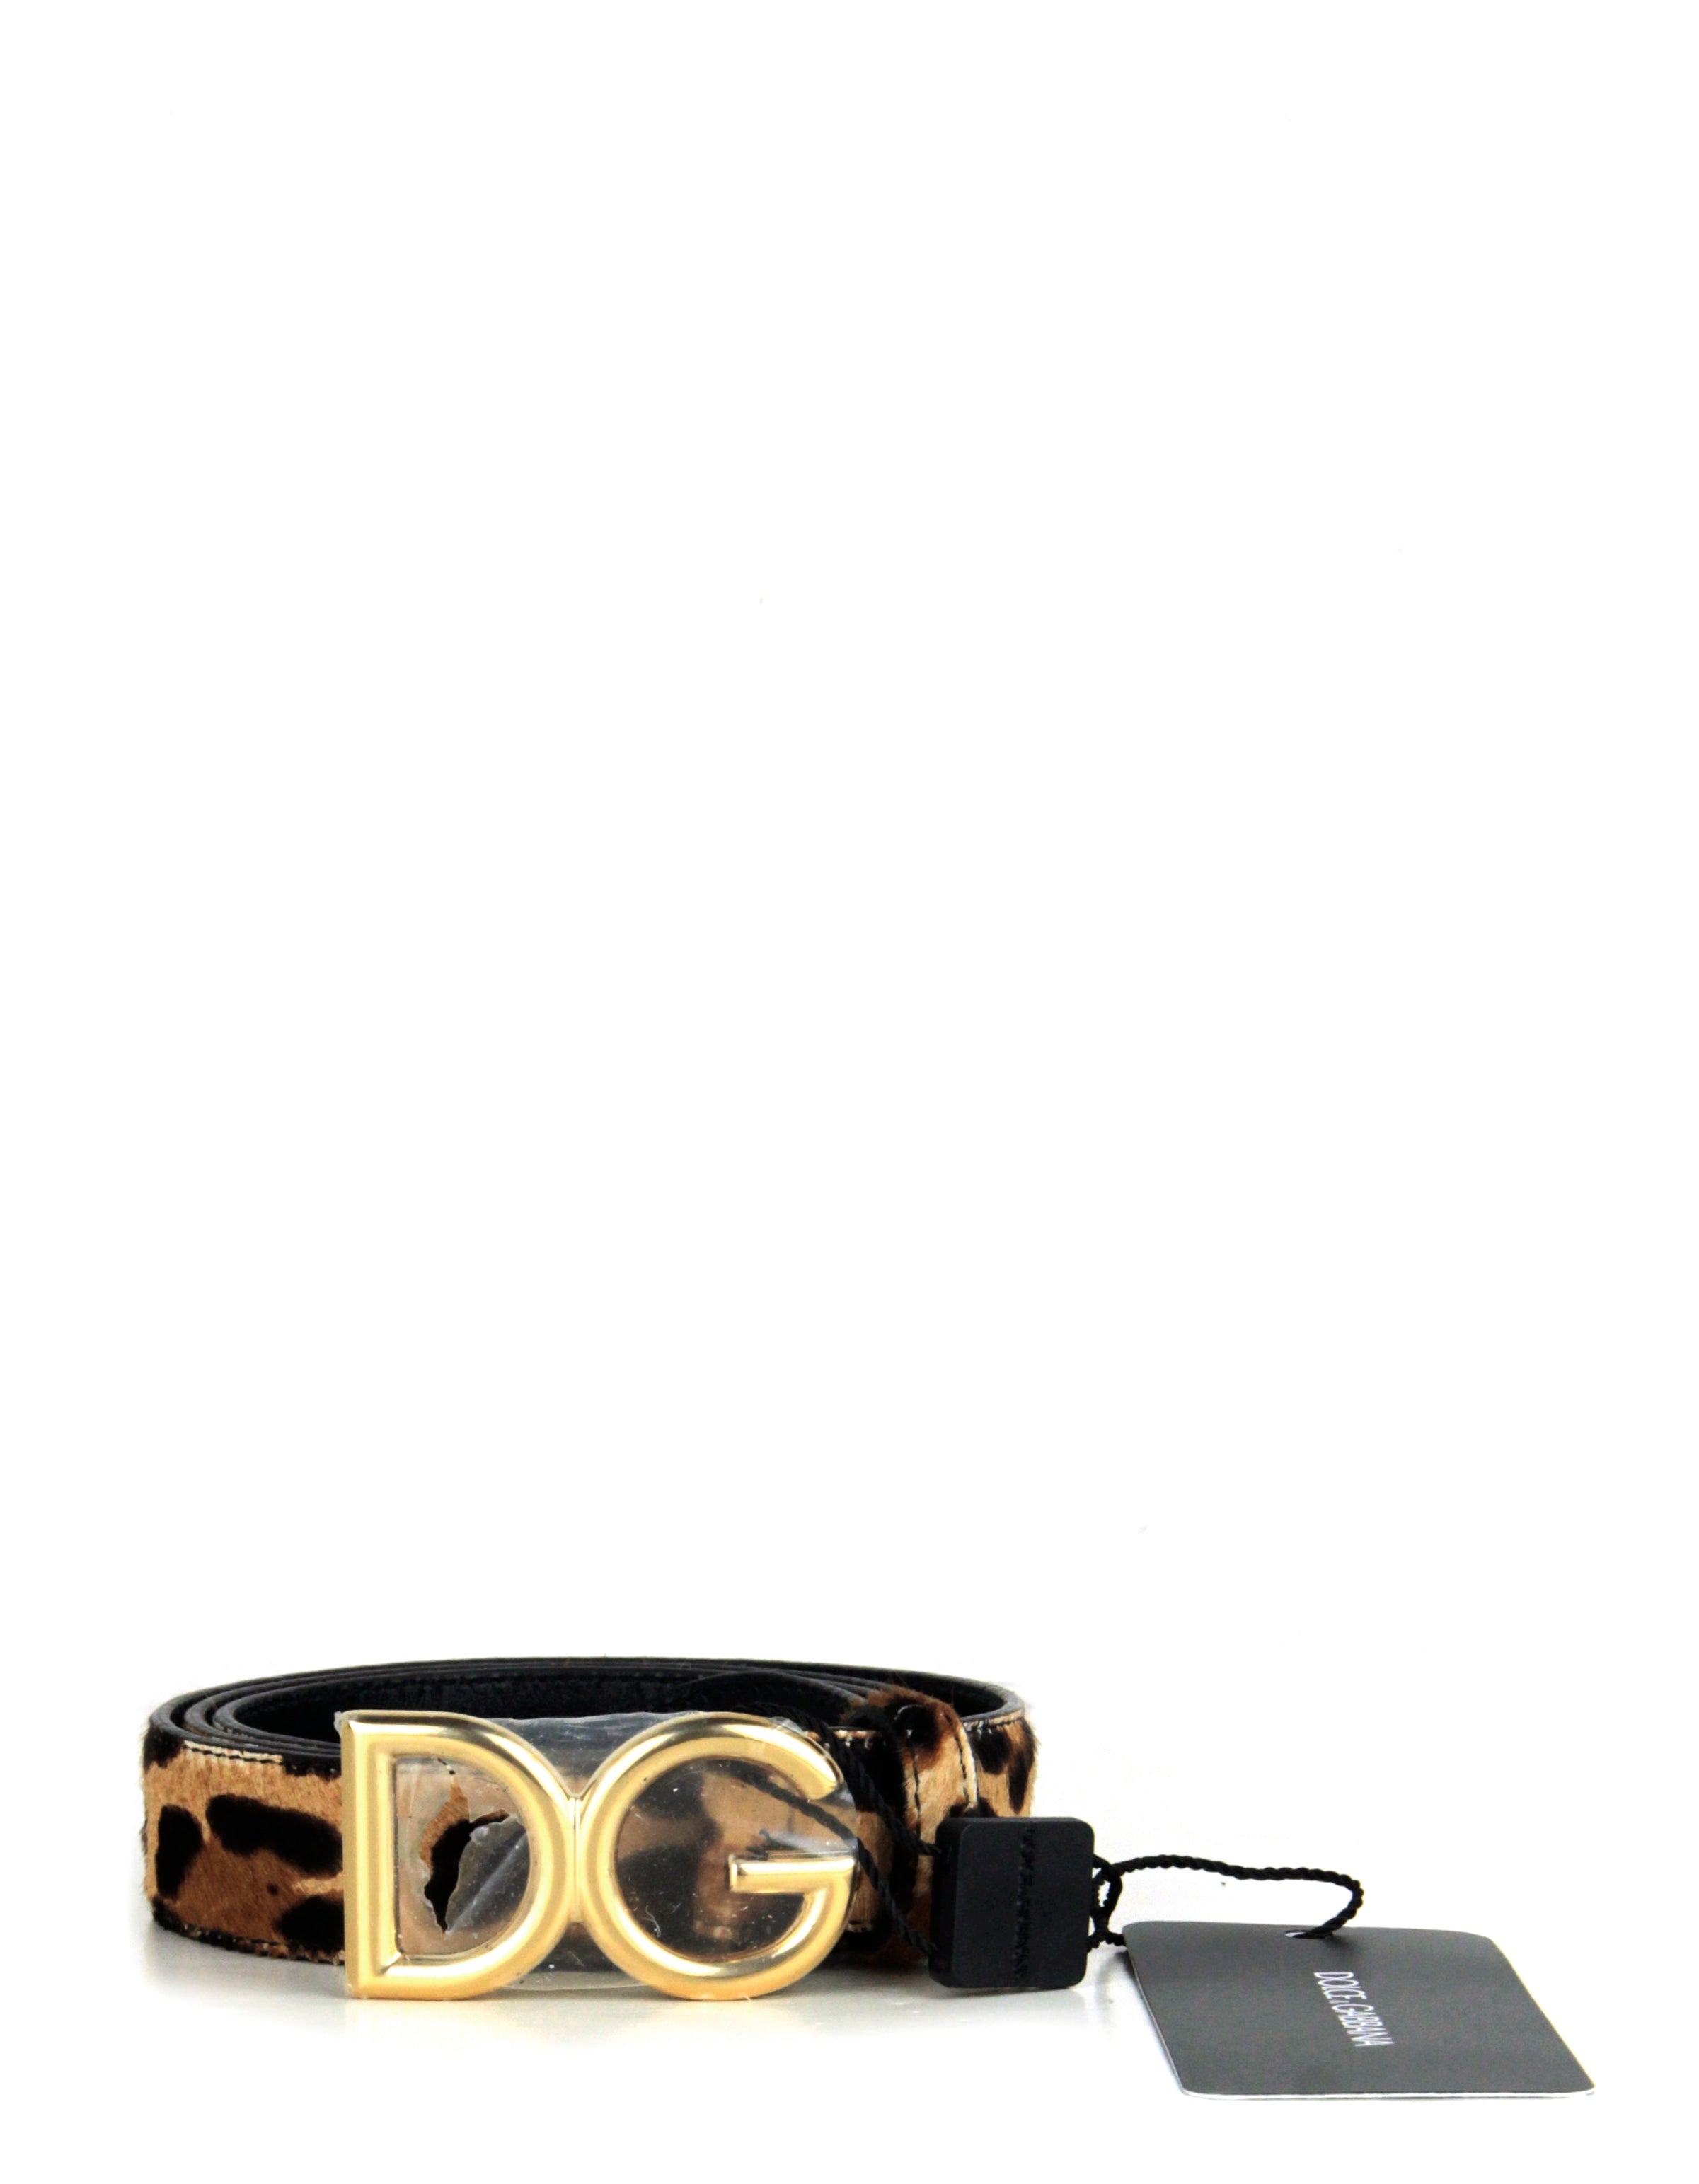 Dolce & Gabbana NWT Leopard Print Pony Hair Logo Buckle Belt sz 85/34